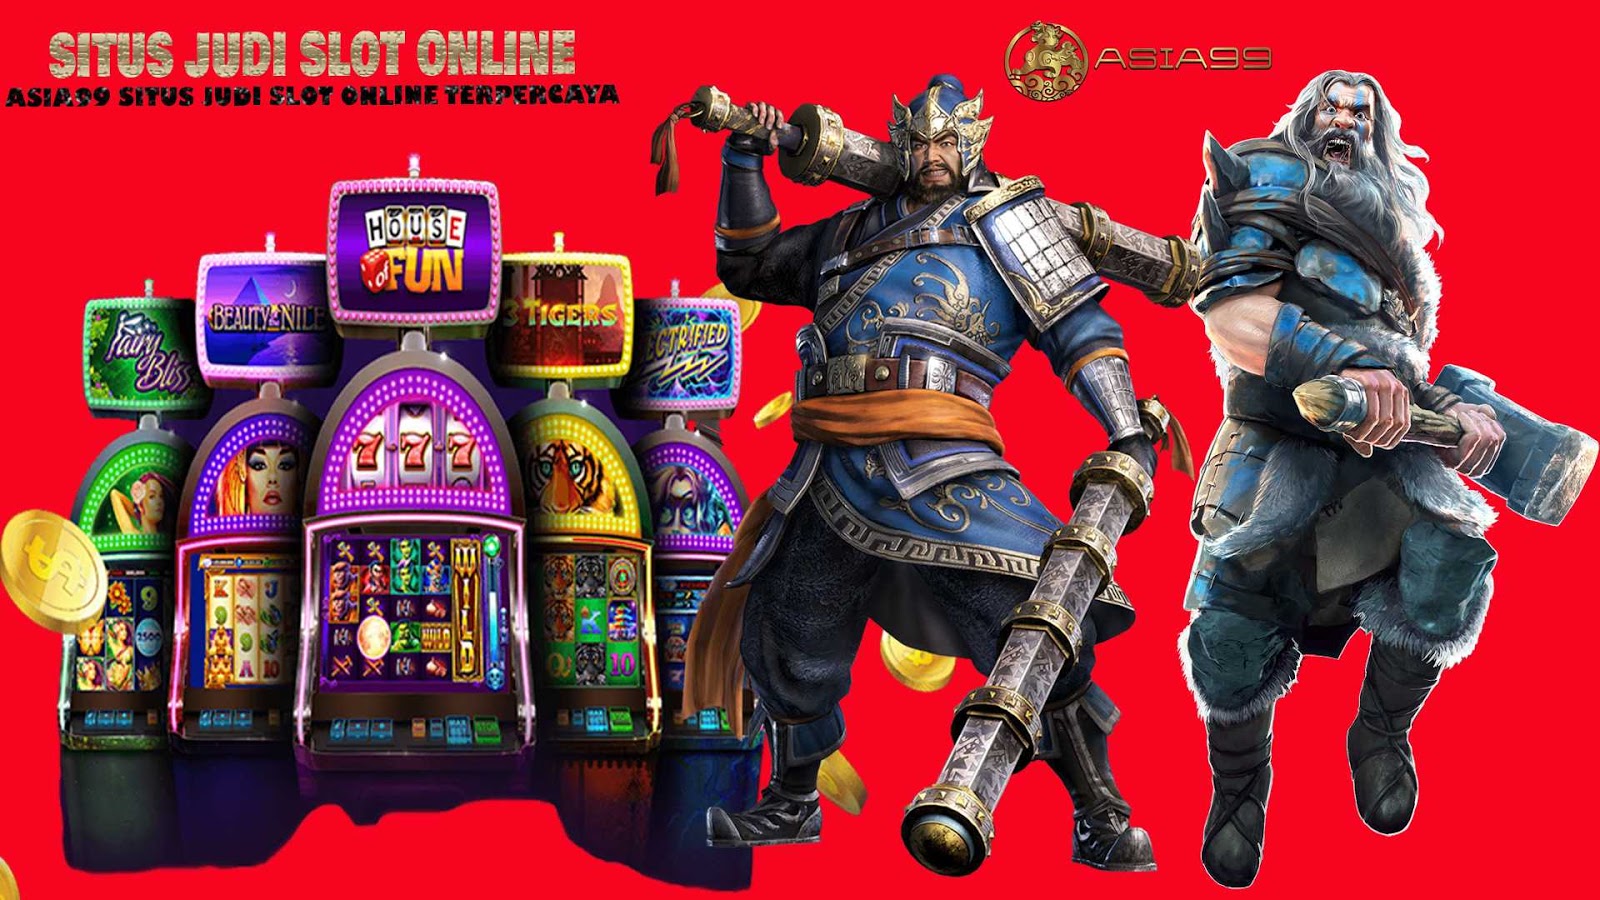 crown casino online